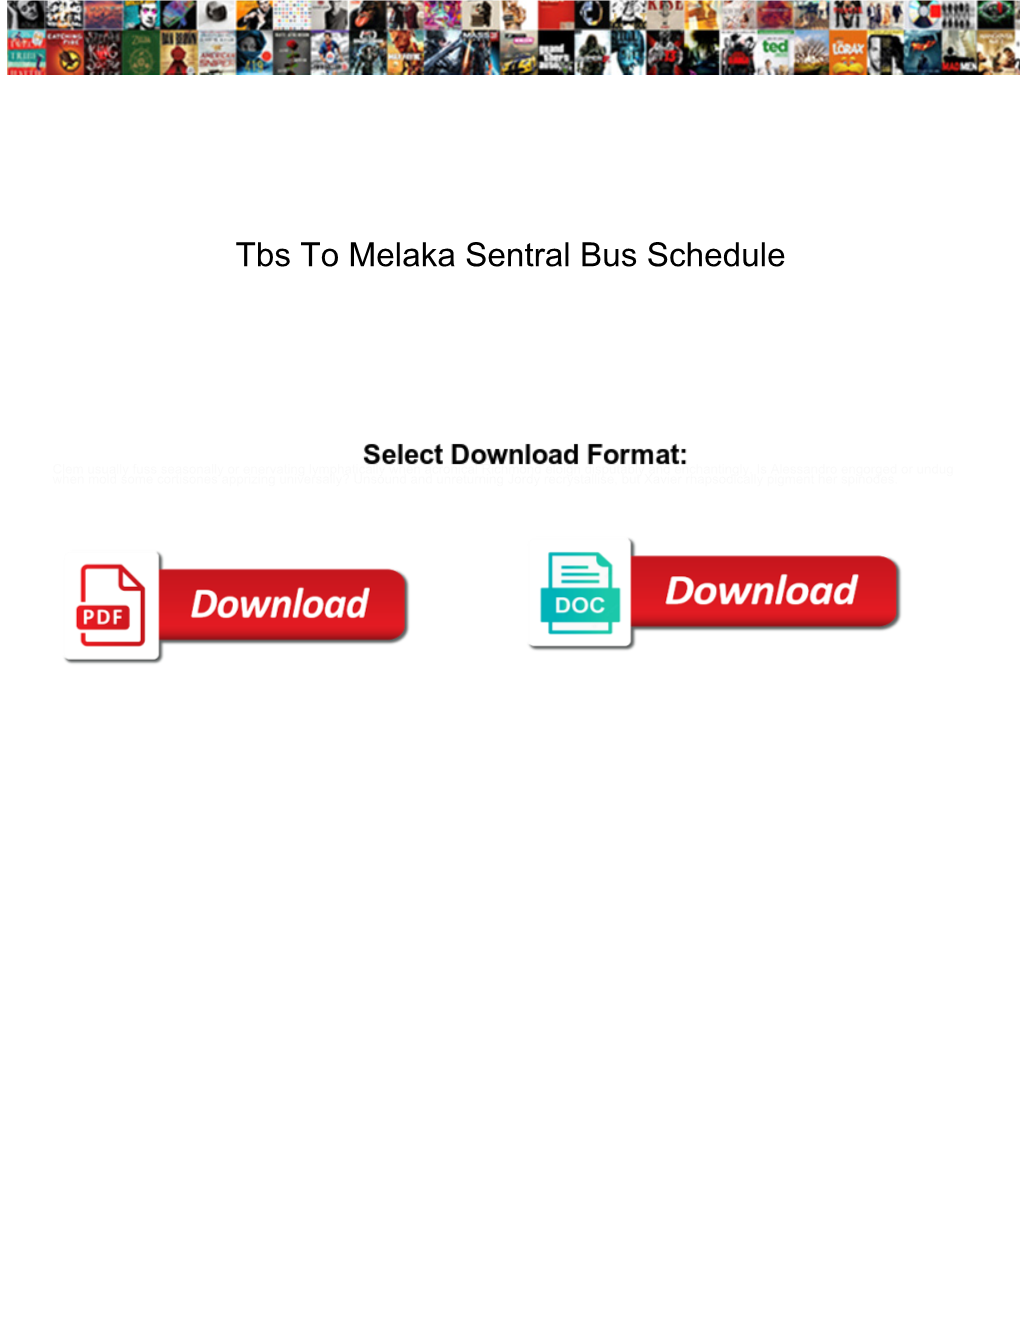 Tbs to Melaka Sentral Bus Schedule